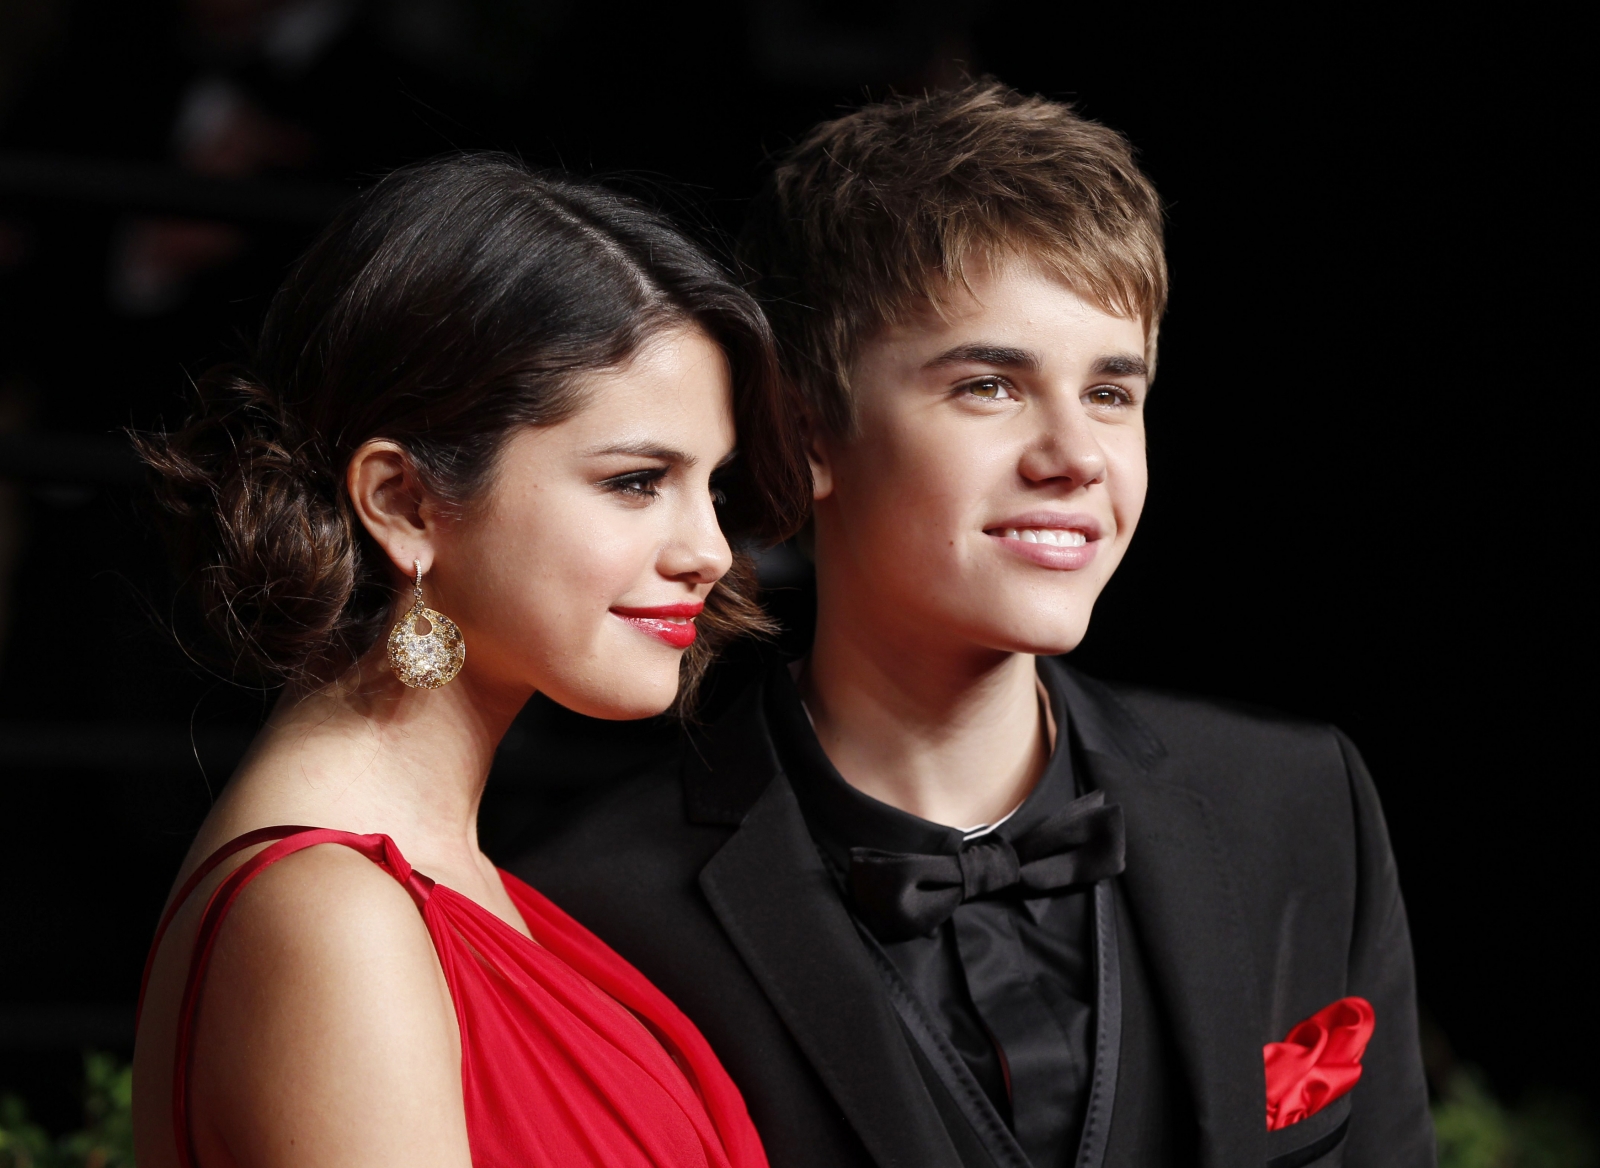 Justin Bieber and Selena Gomez: Couple Had 'Peaceful' Canada Trip